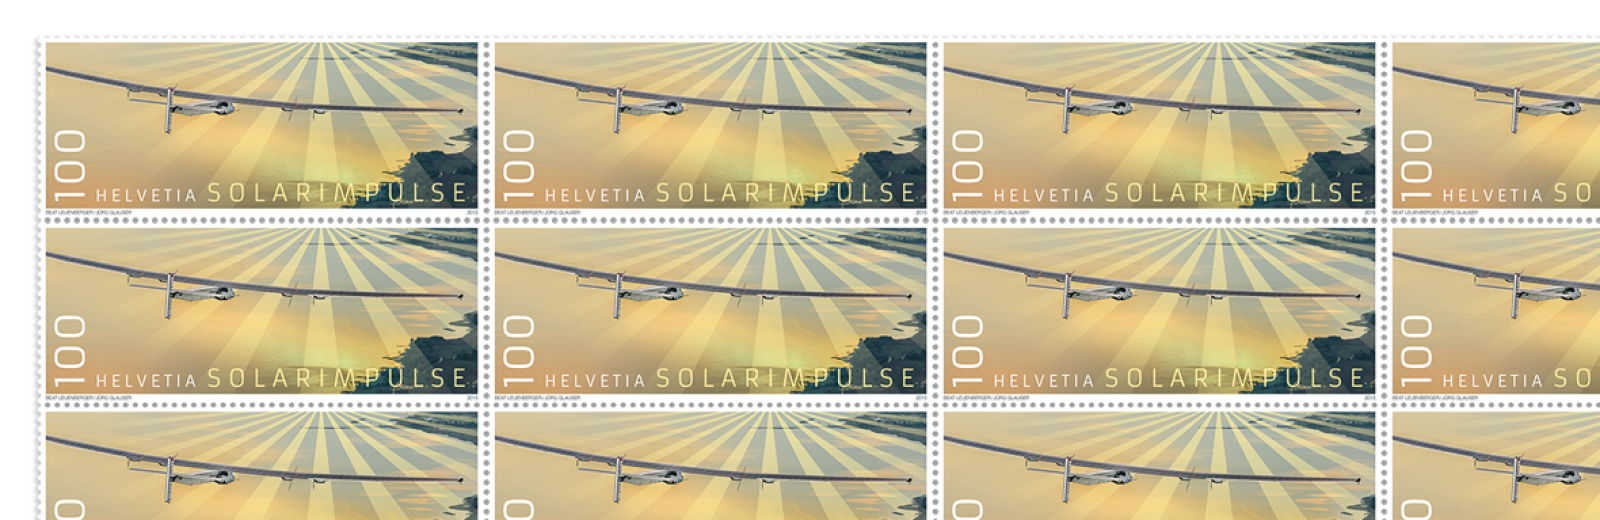 Solar Impulse Stamp